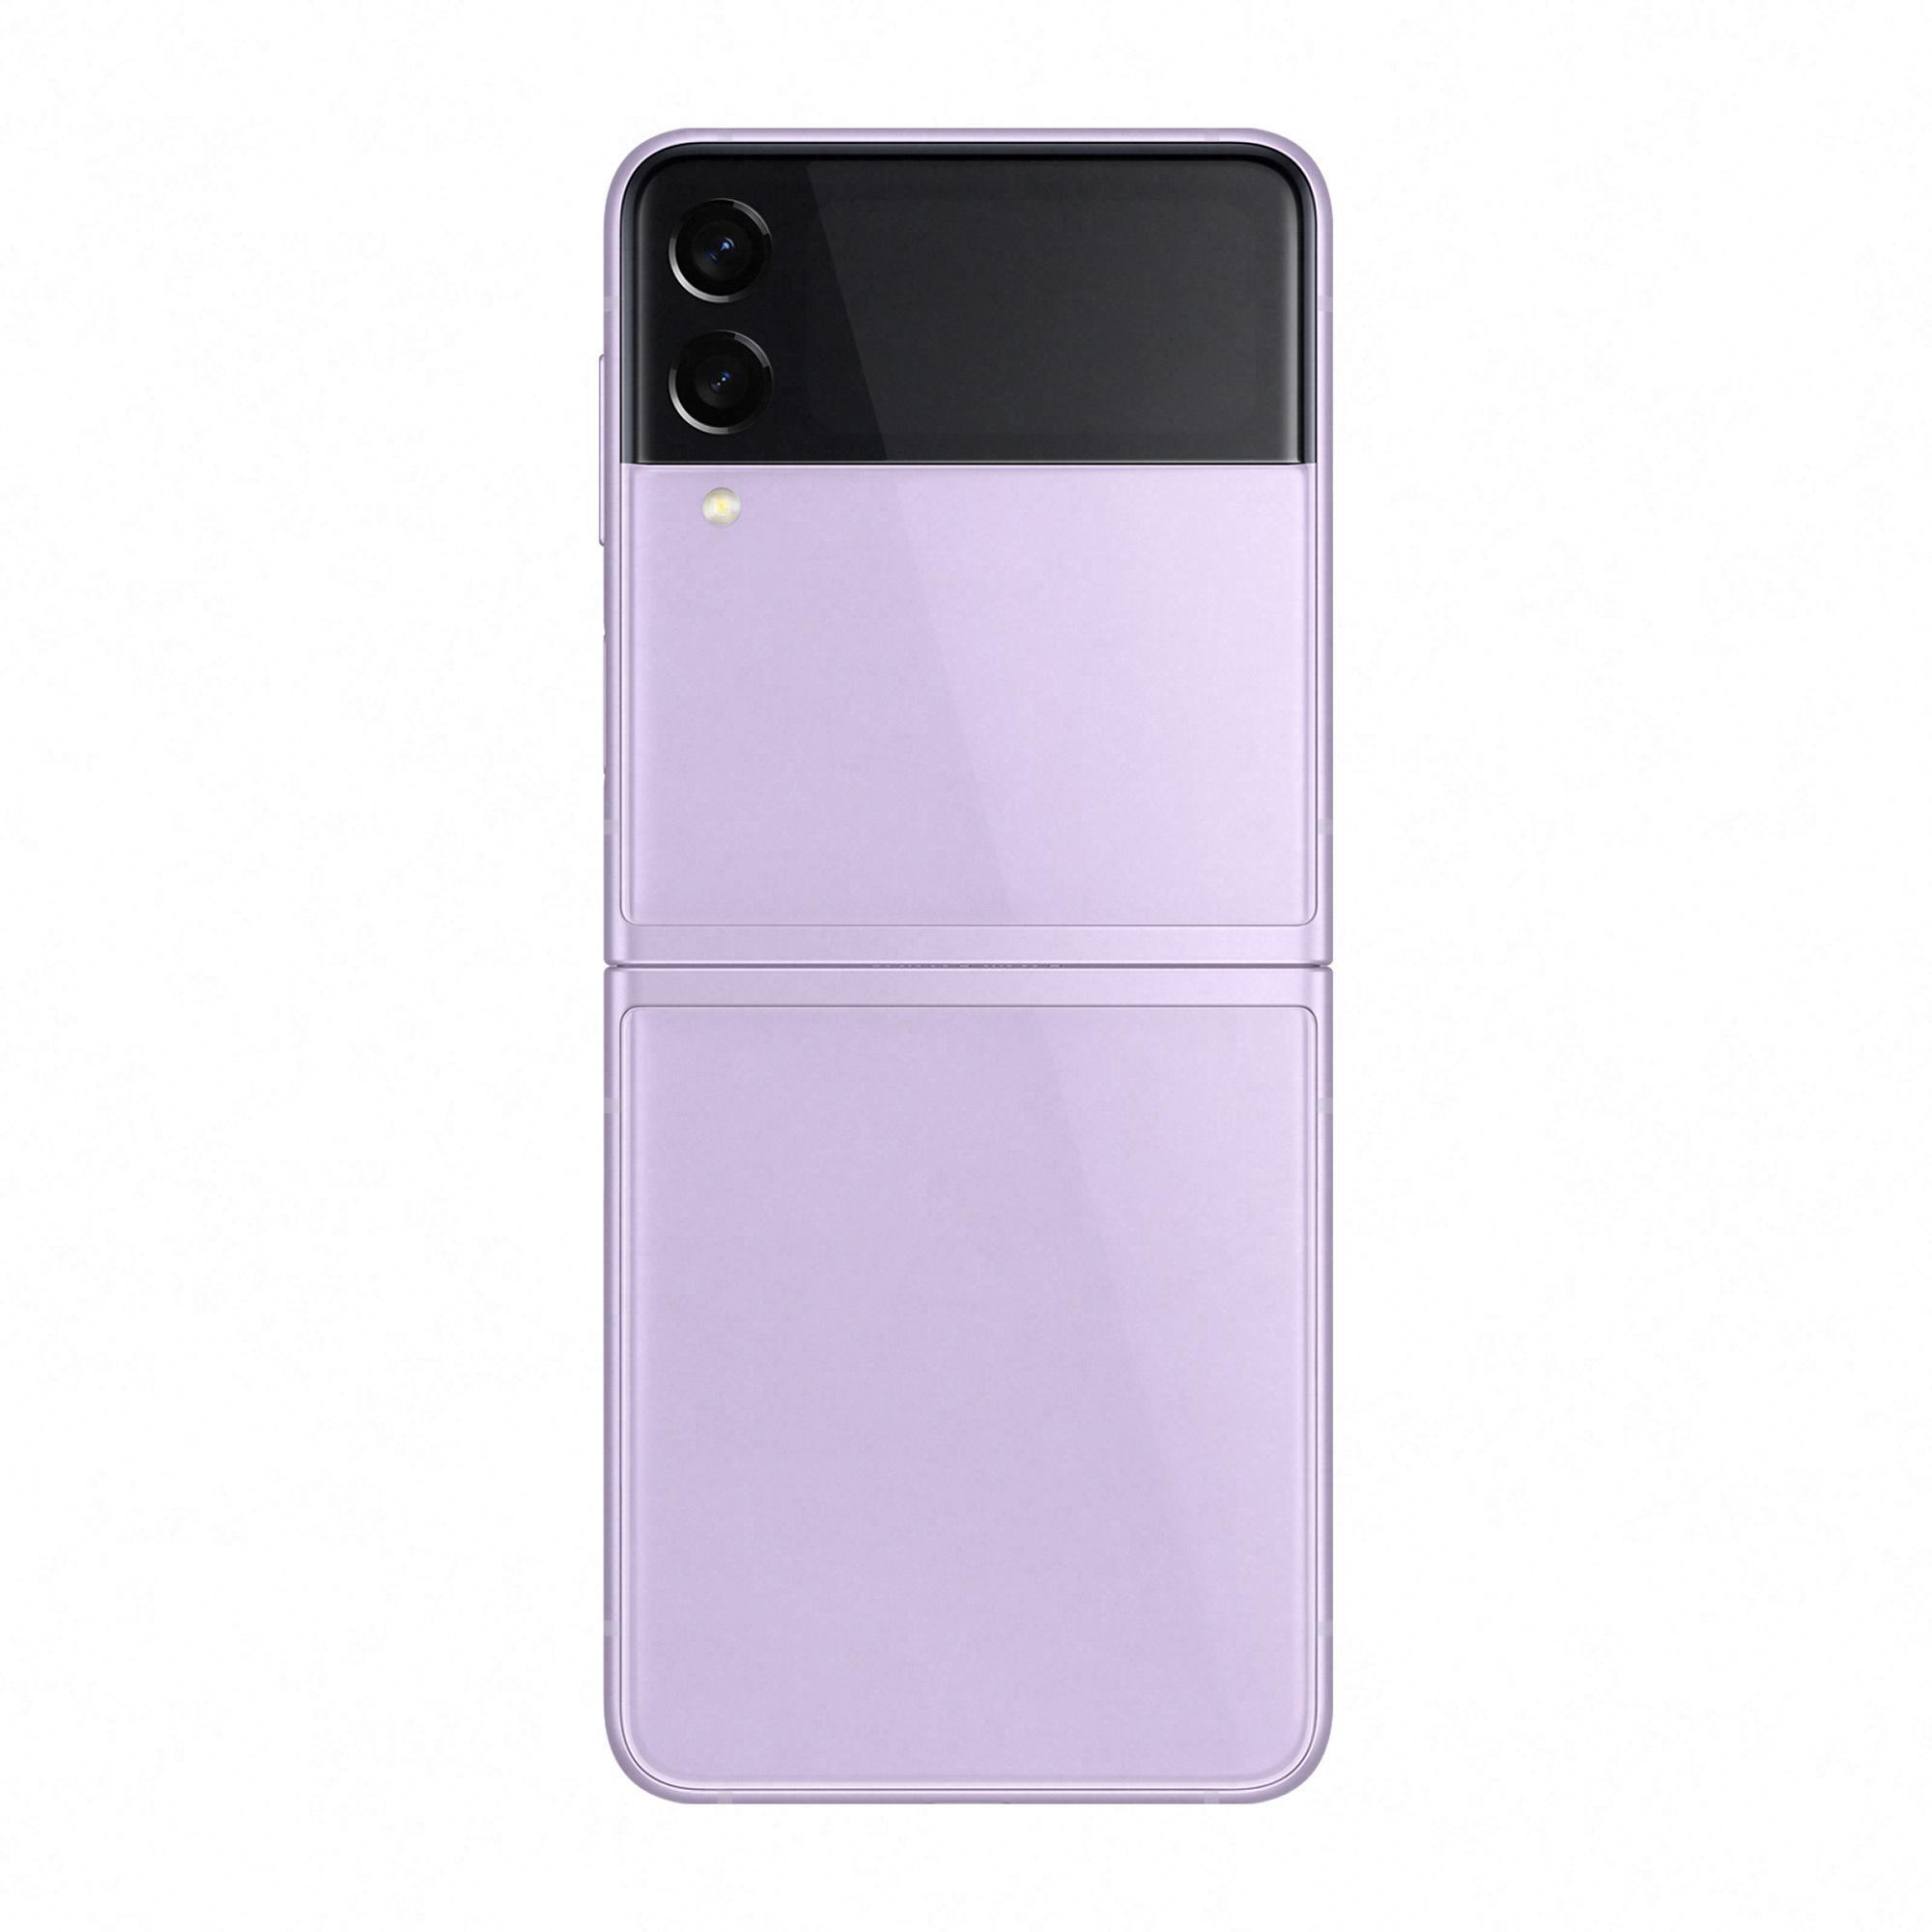 SAMSUNG Galaxy Z Flip3 5G 256 Phantom SIM Dual GB Lavender